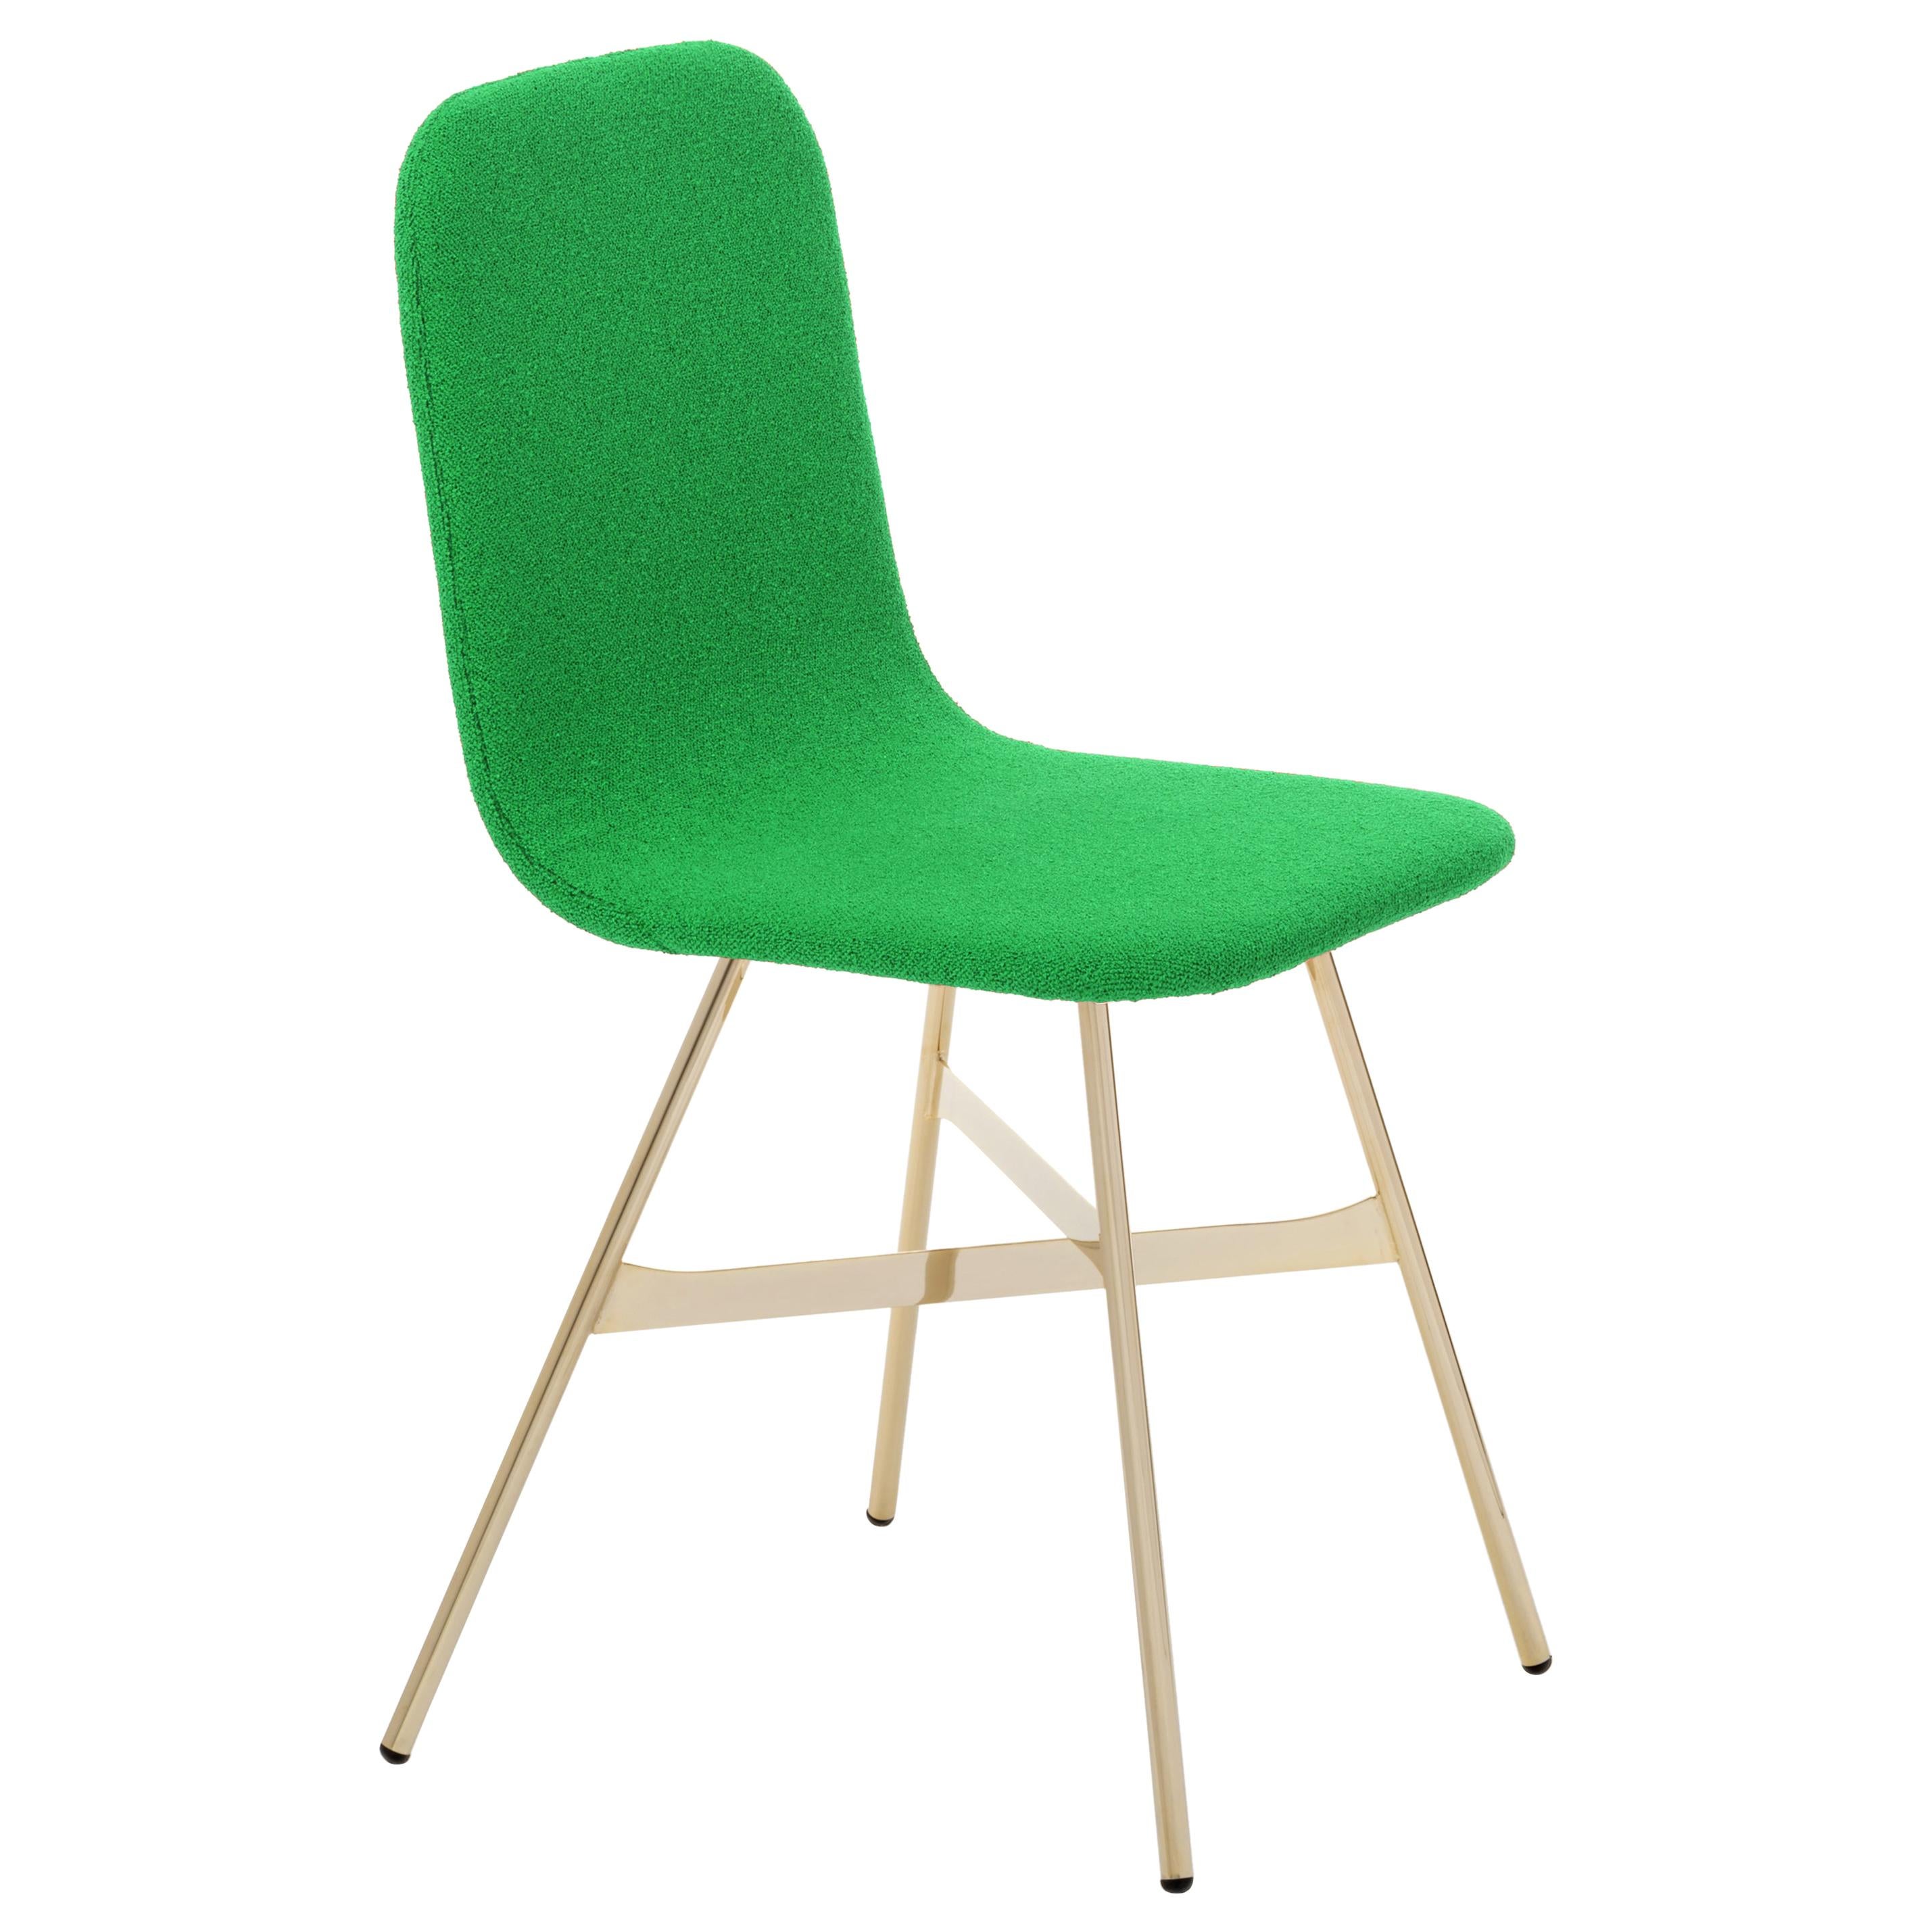 Tria Simple Chair Golden Legs Upholstered in Mint Green Velvet Made in Italy